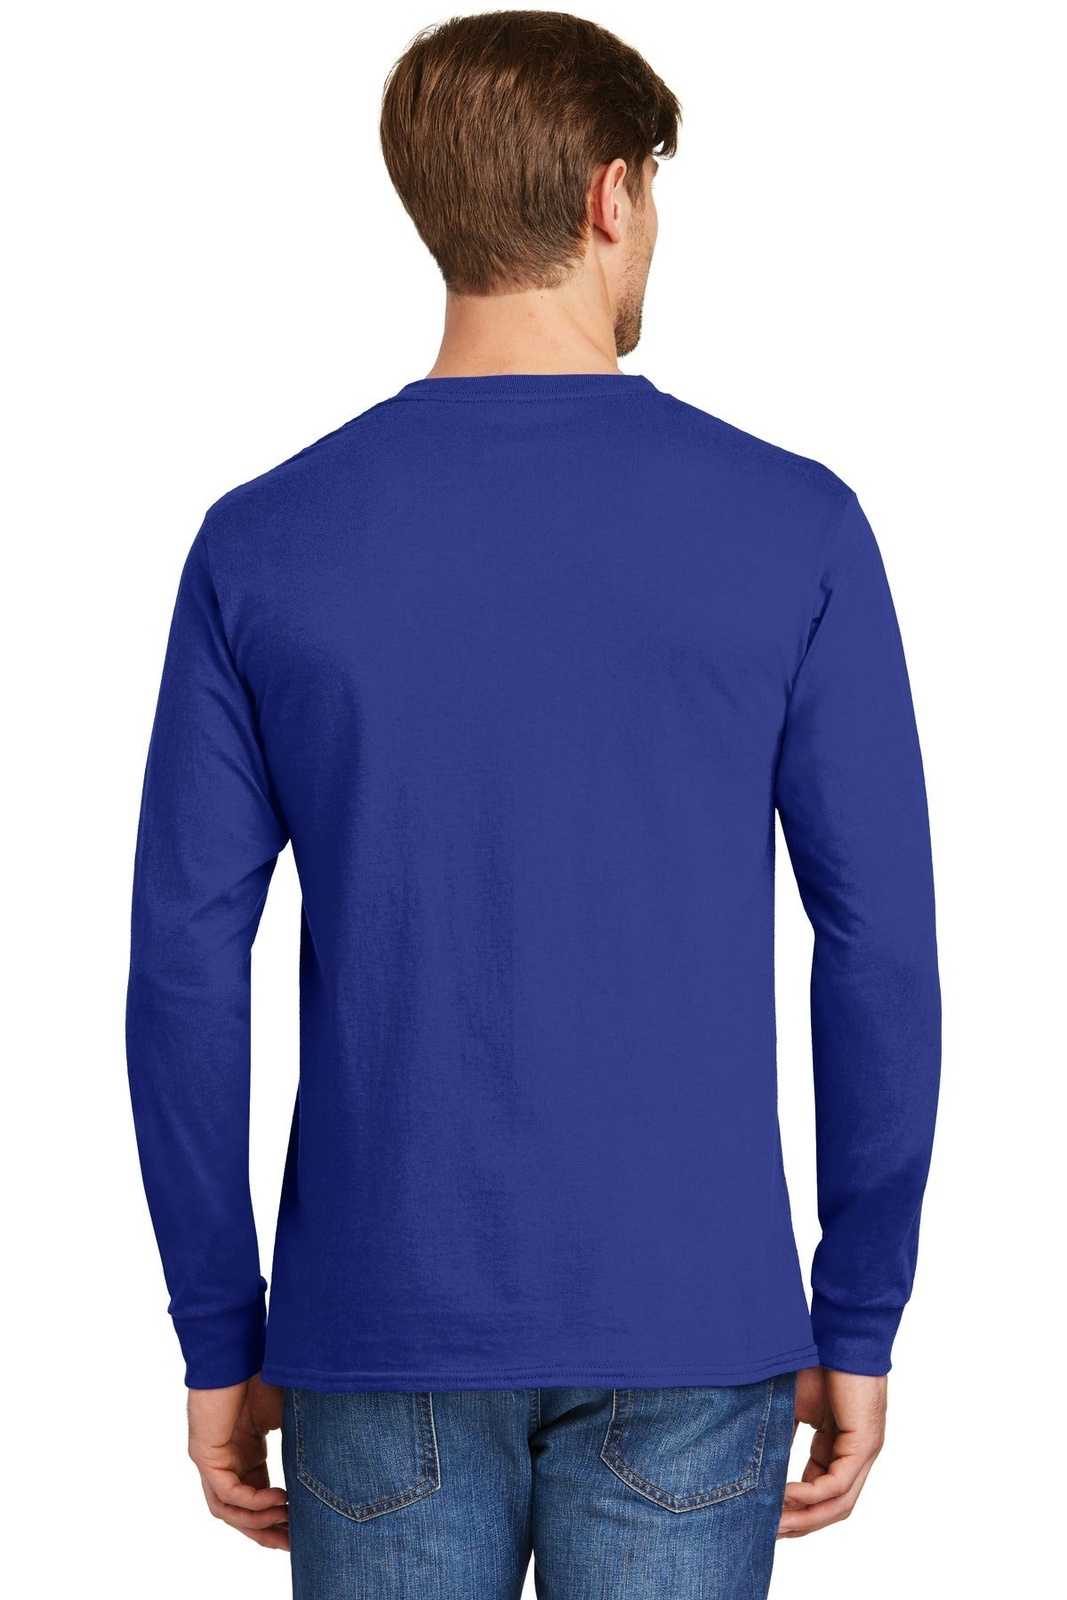 Hanes 5586 Tagless 100% Cotton Long Sleeve T-Shirt - Deep Royal - HIT a Double